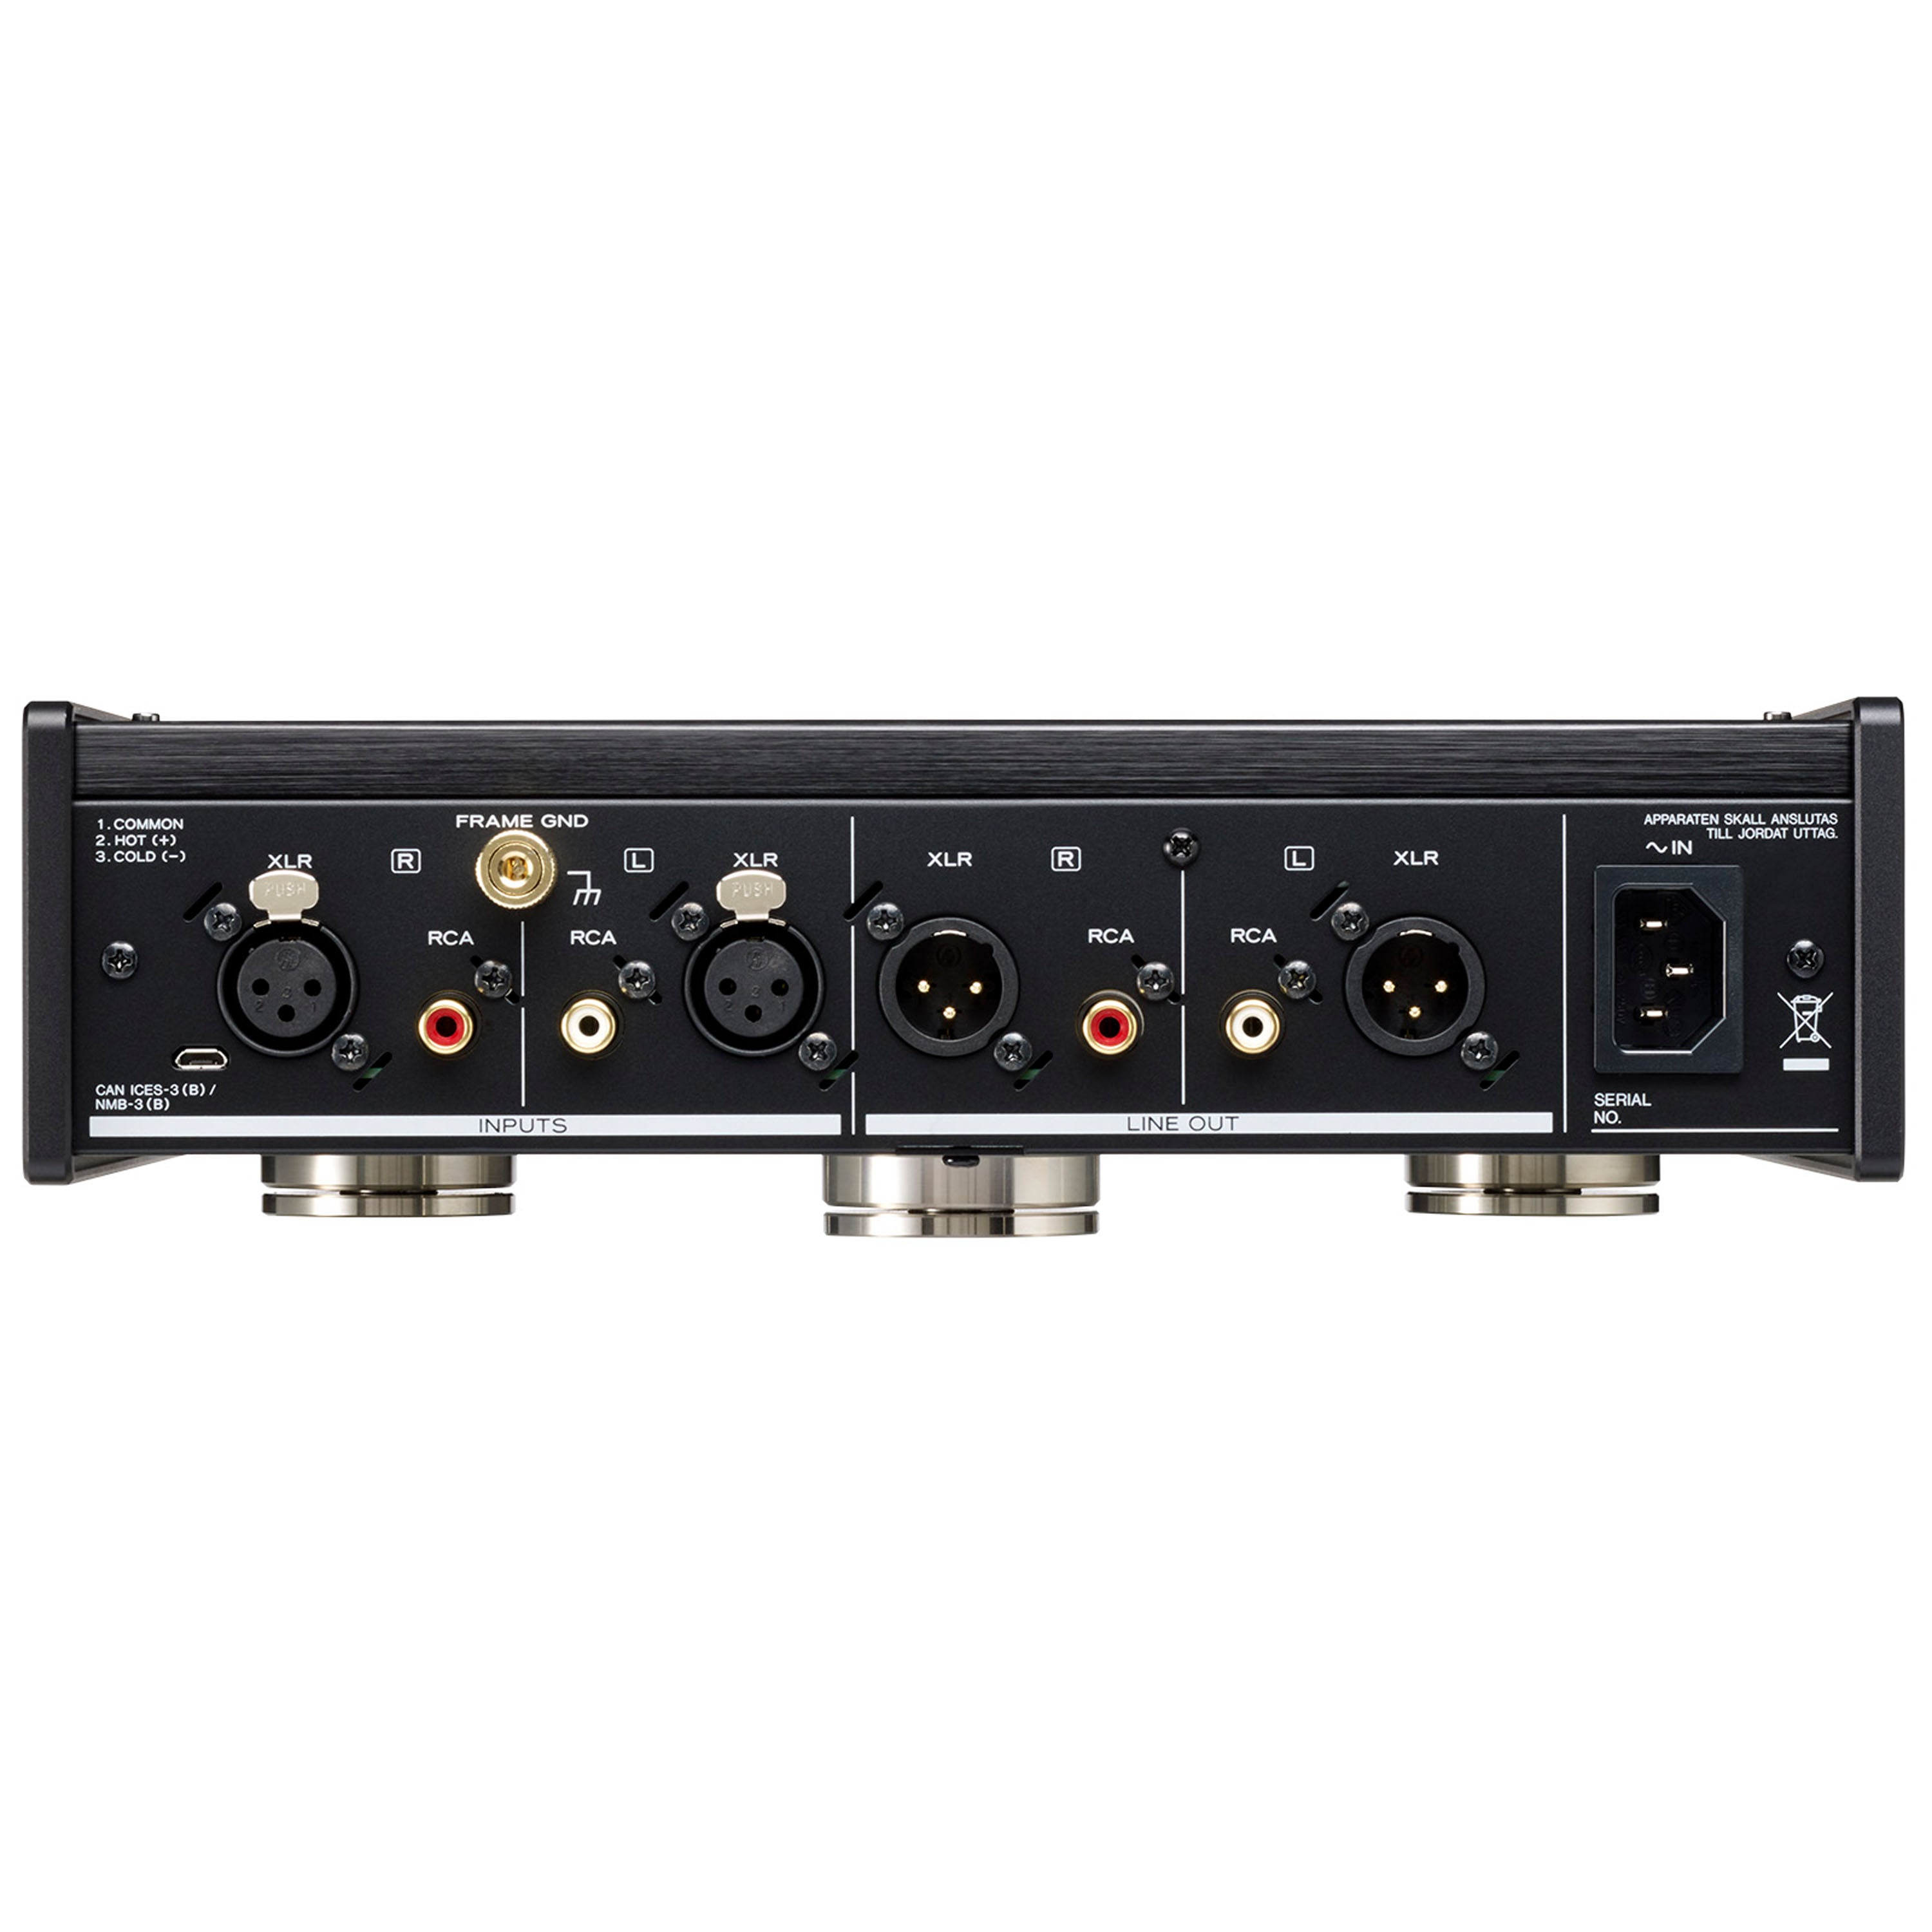 TEAC PE-505 Fully-balanced Phono Amplifier (Black)